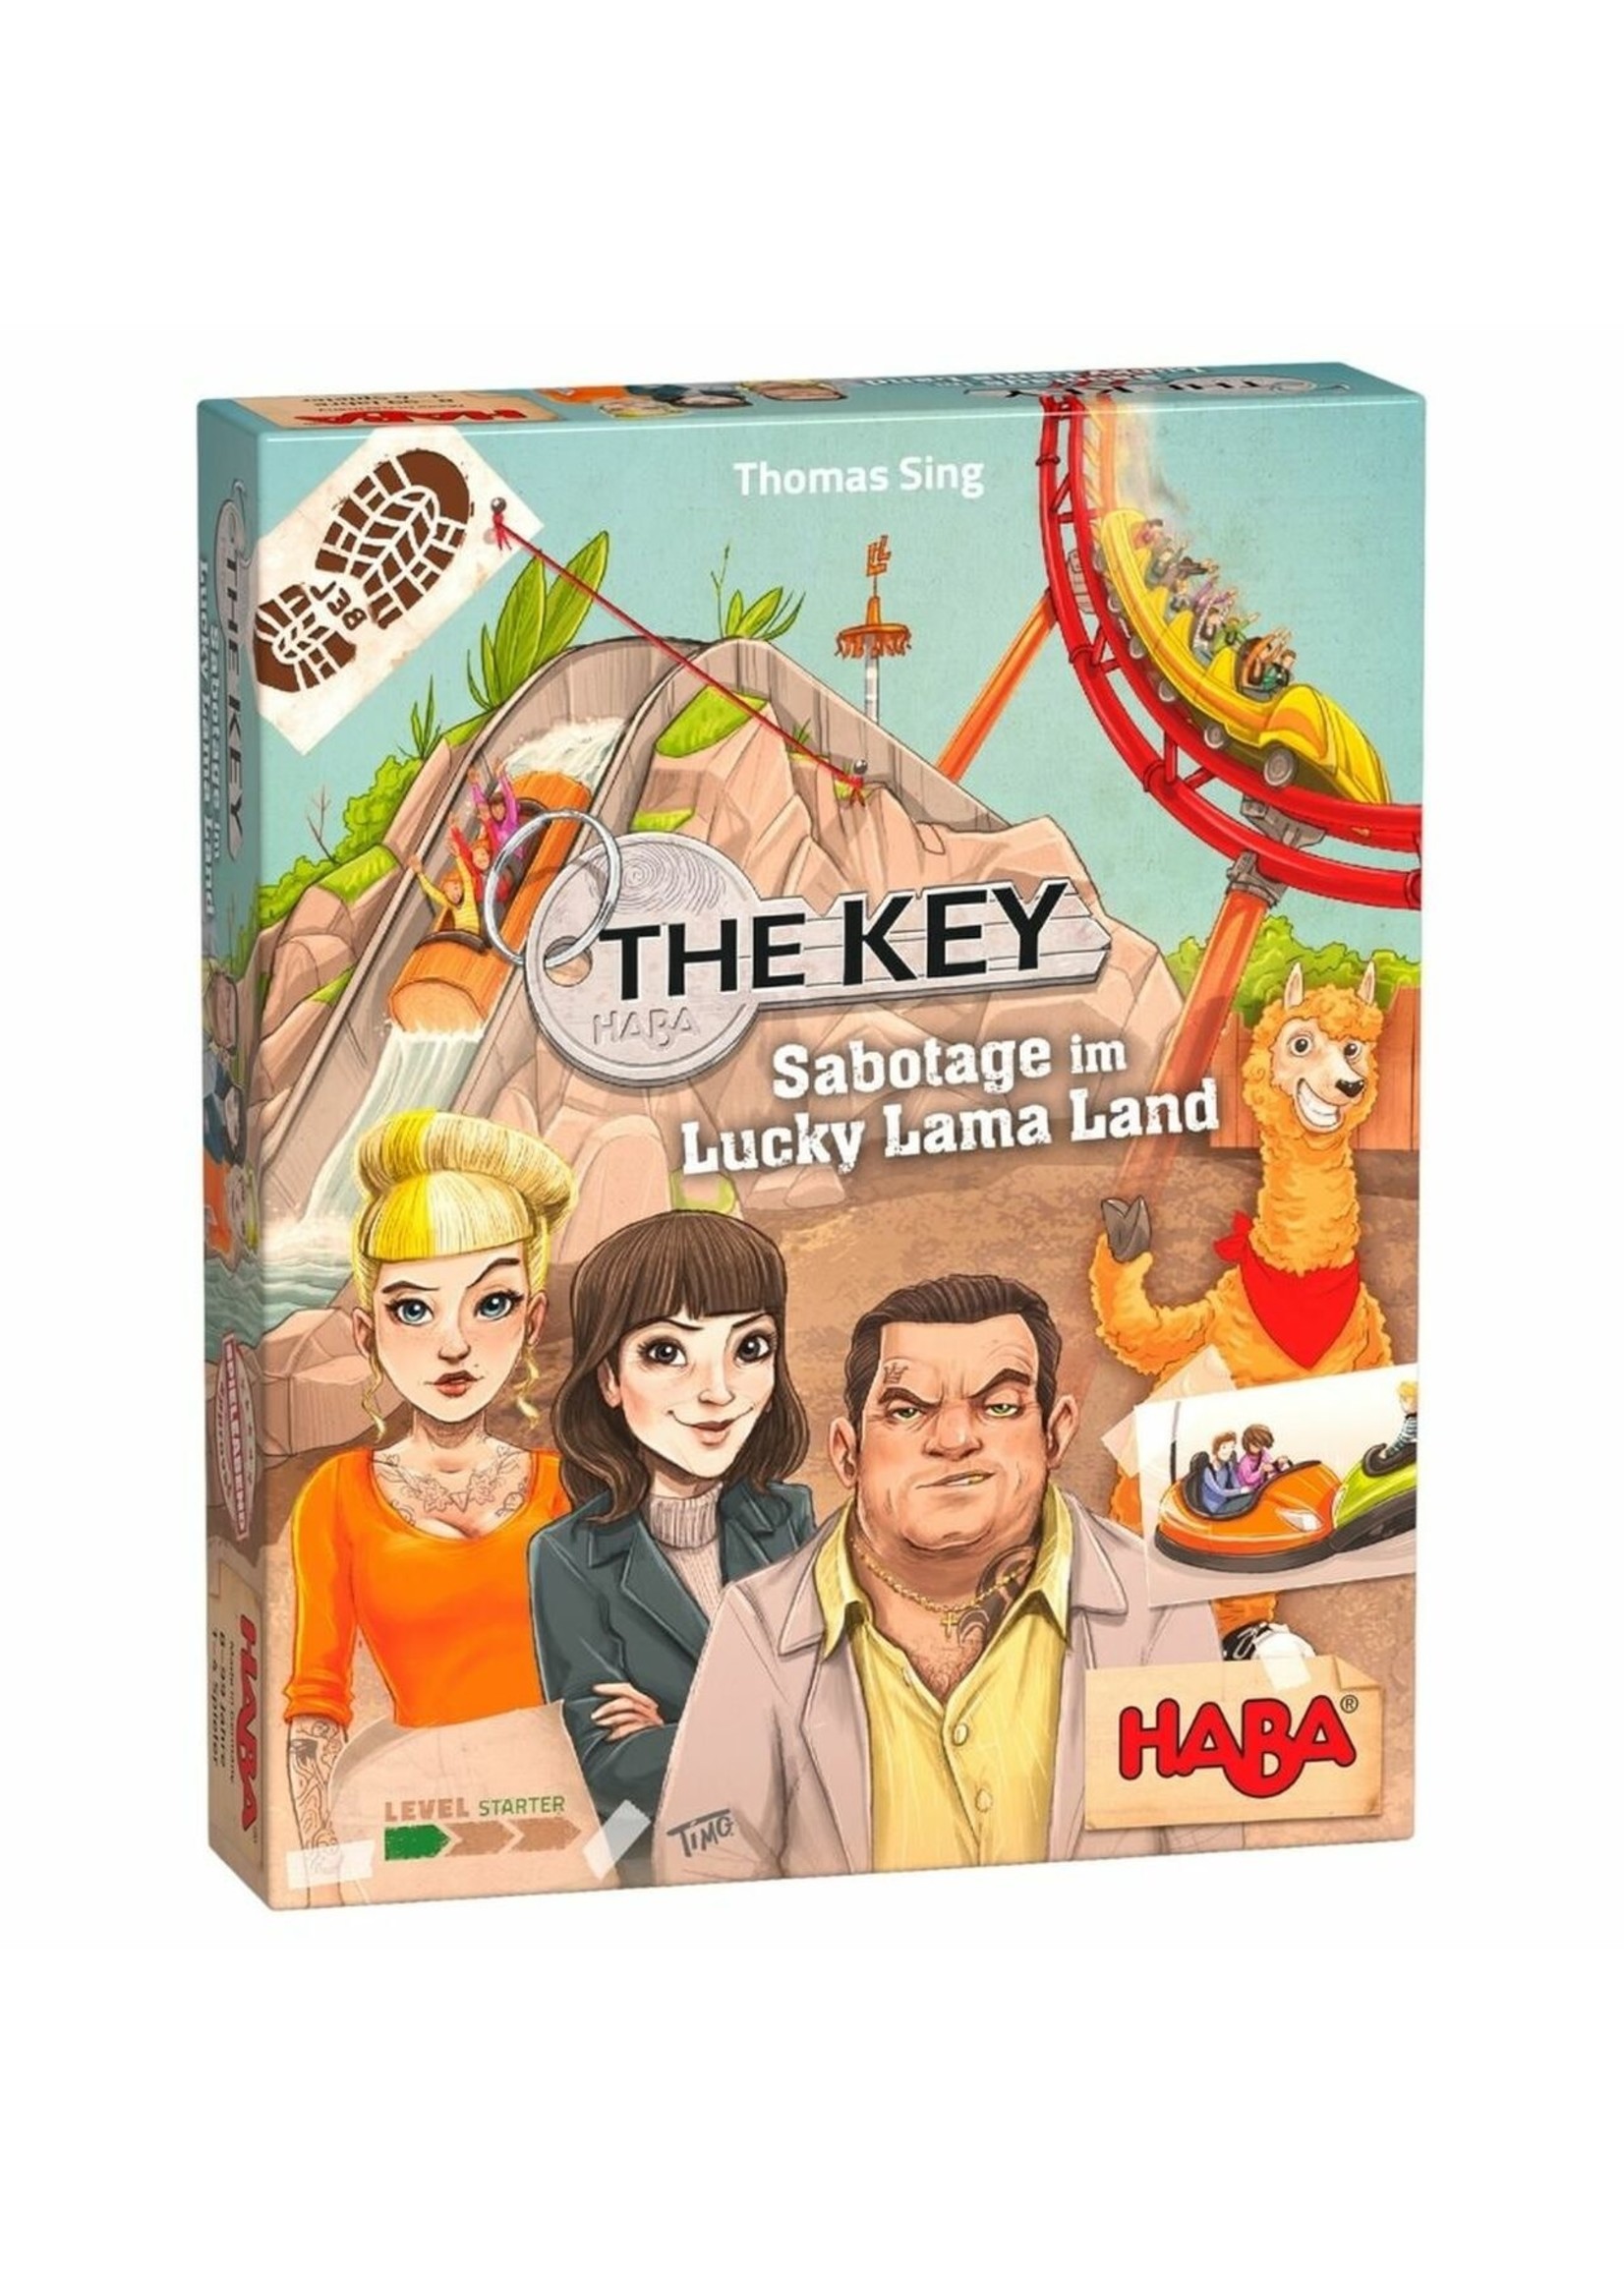 Haba The key - Sabotage at Lucky llama land (Bilingue)